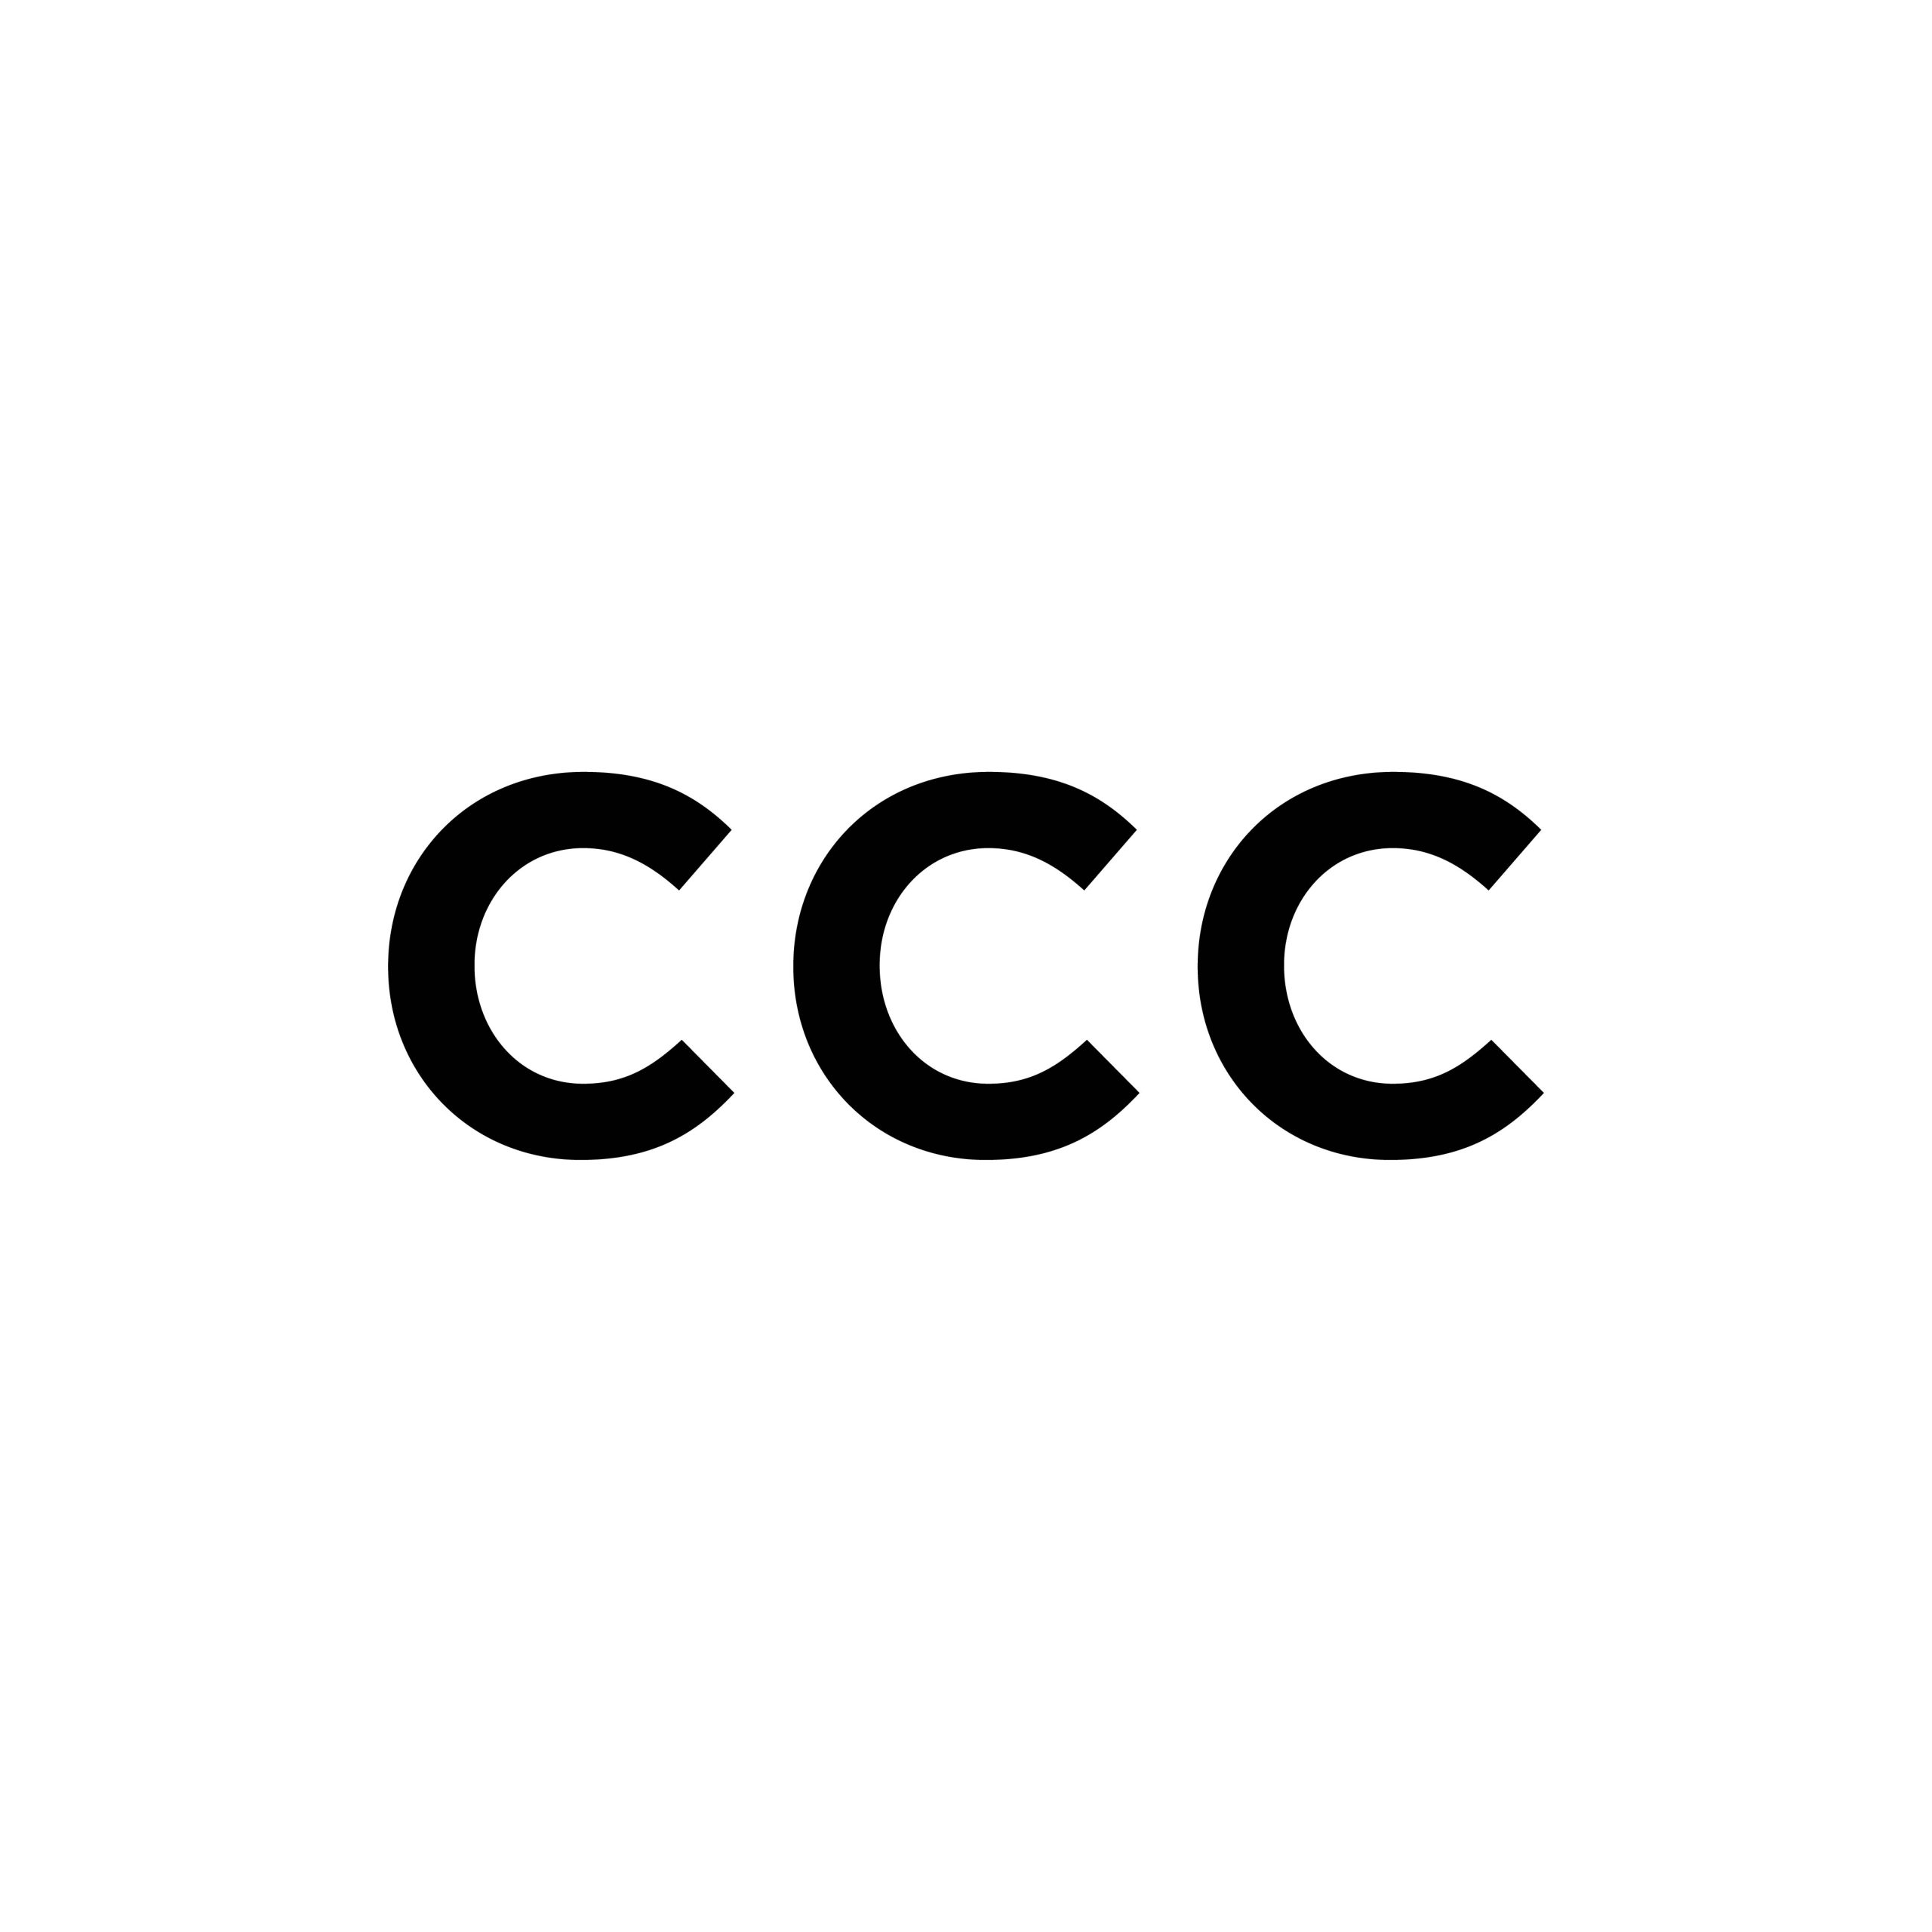 CCC - logo